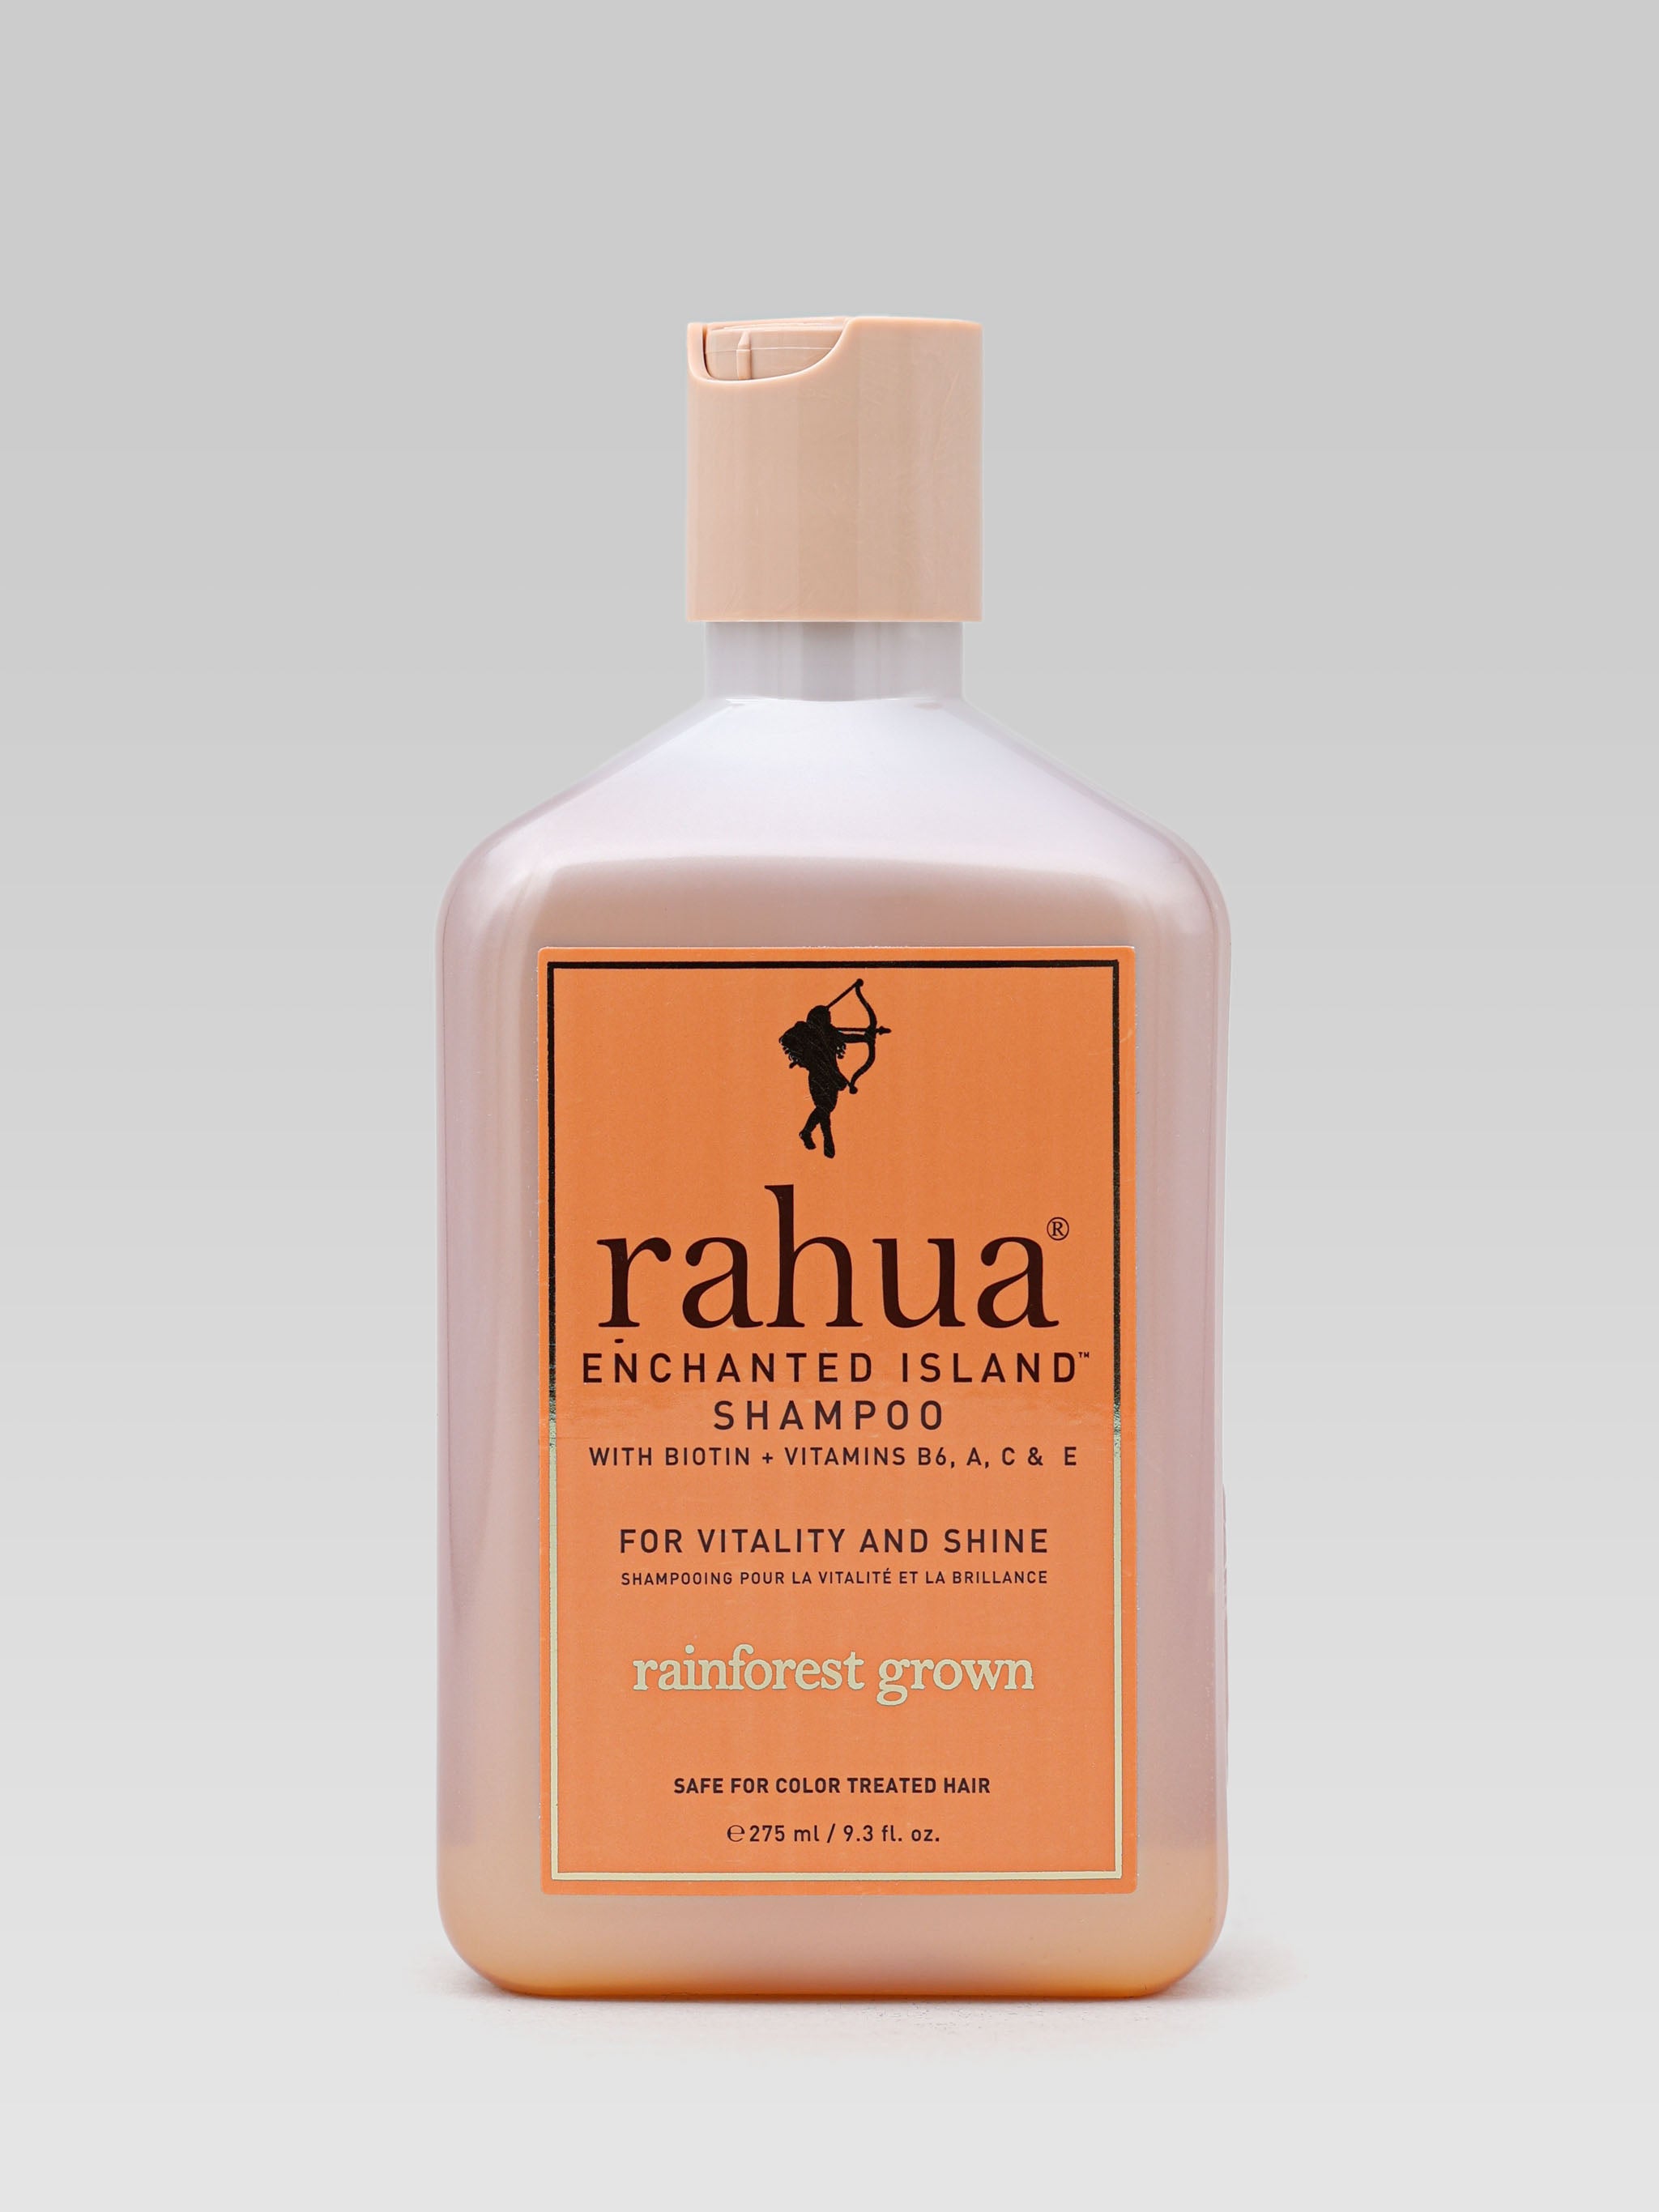 Rahua Enchanted Island Shampoo product shot 